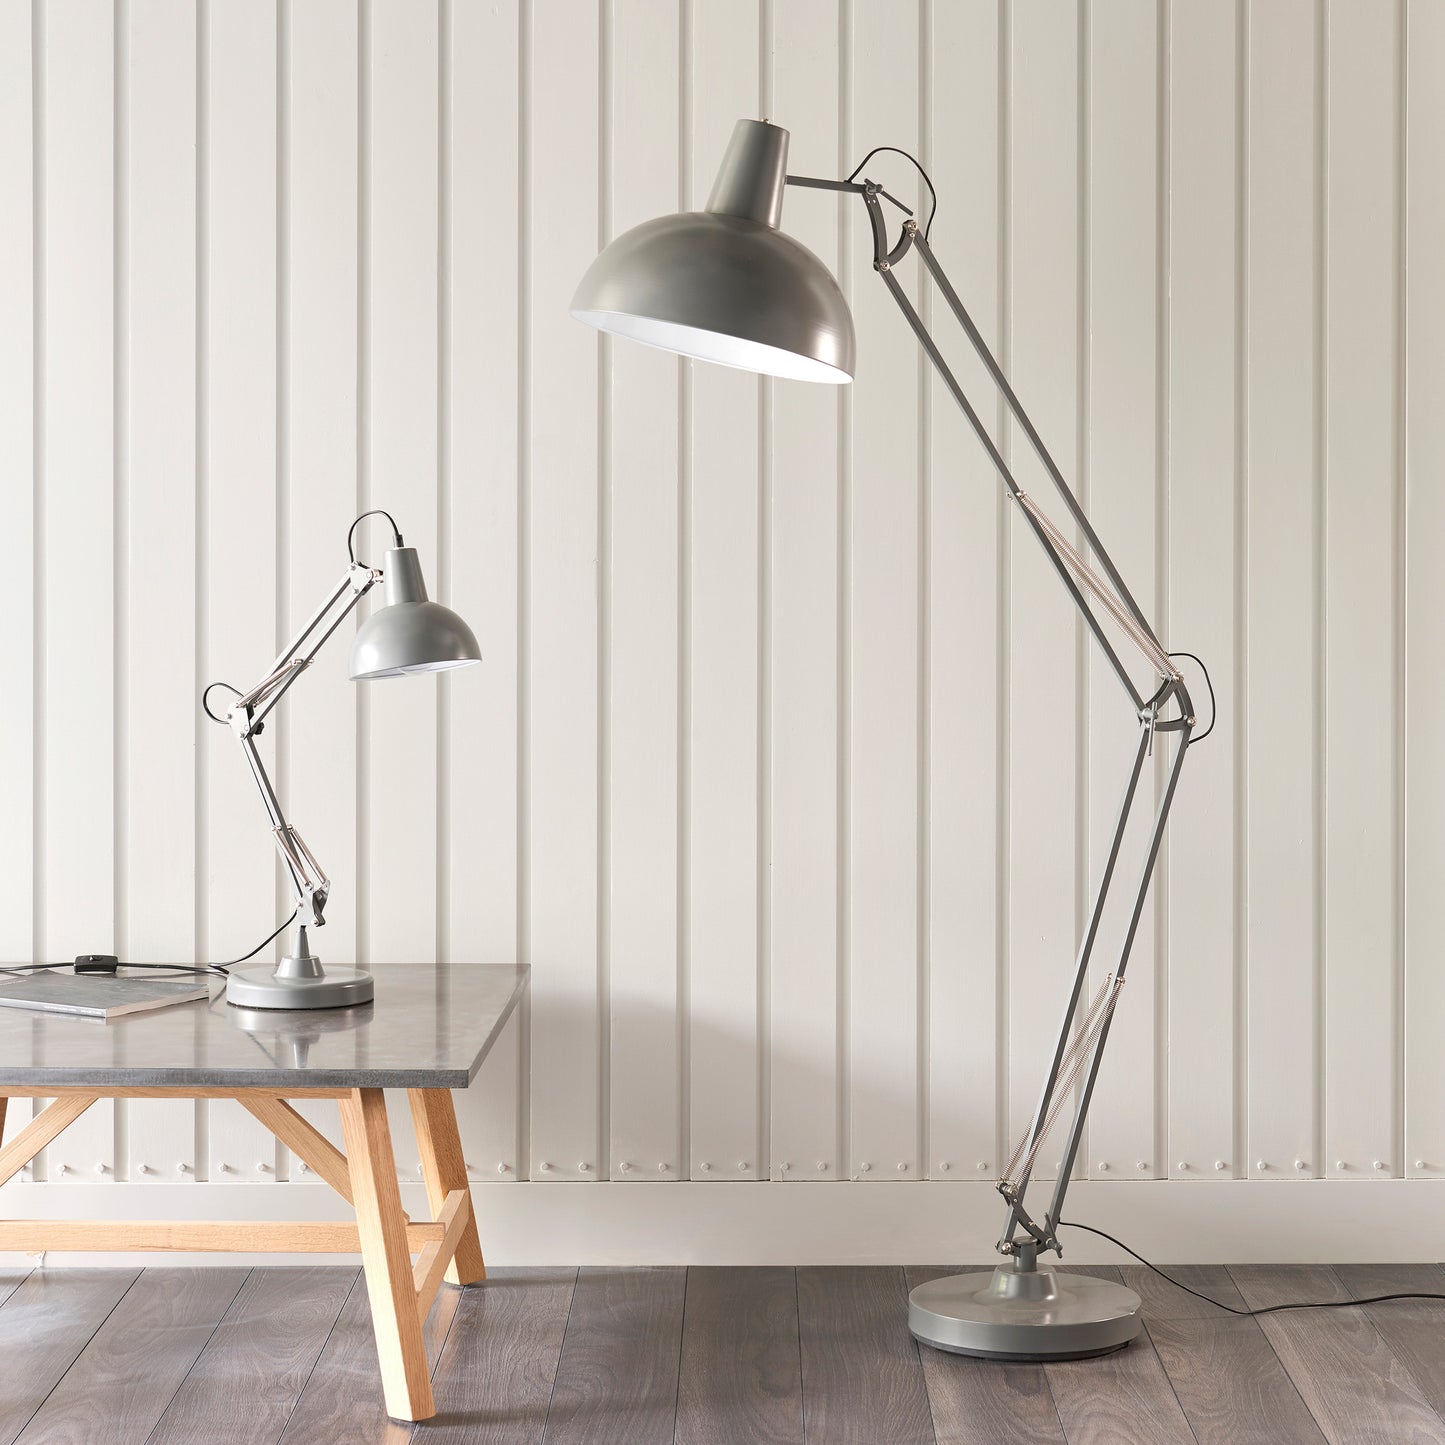 A stylish Marshall 1 Table Light Slate Grey & White floor lamp illuminates a wooden table, enhancing the interior decor of a room.